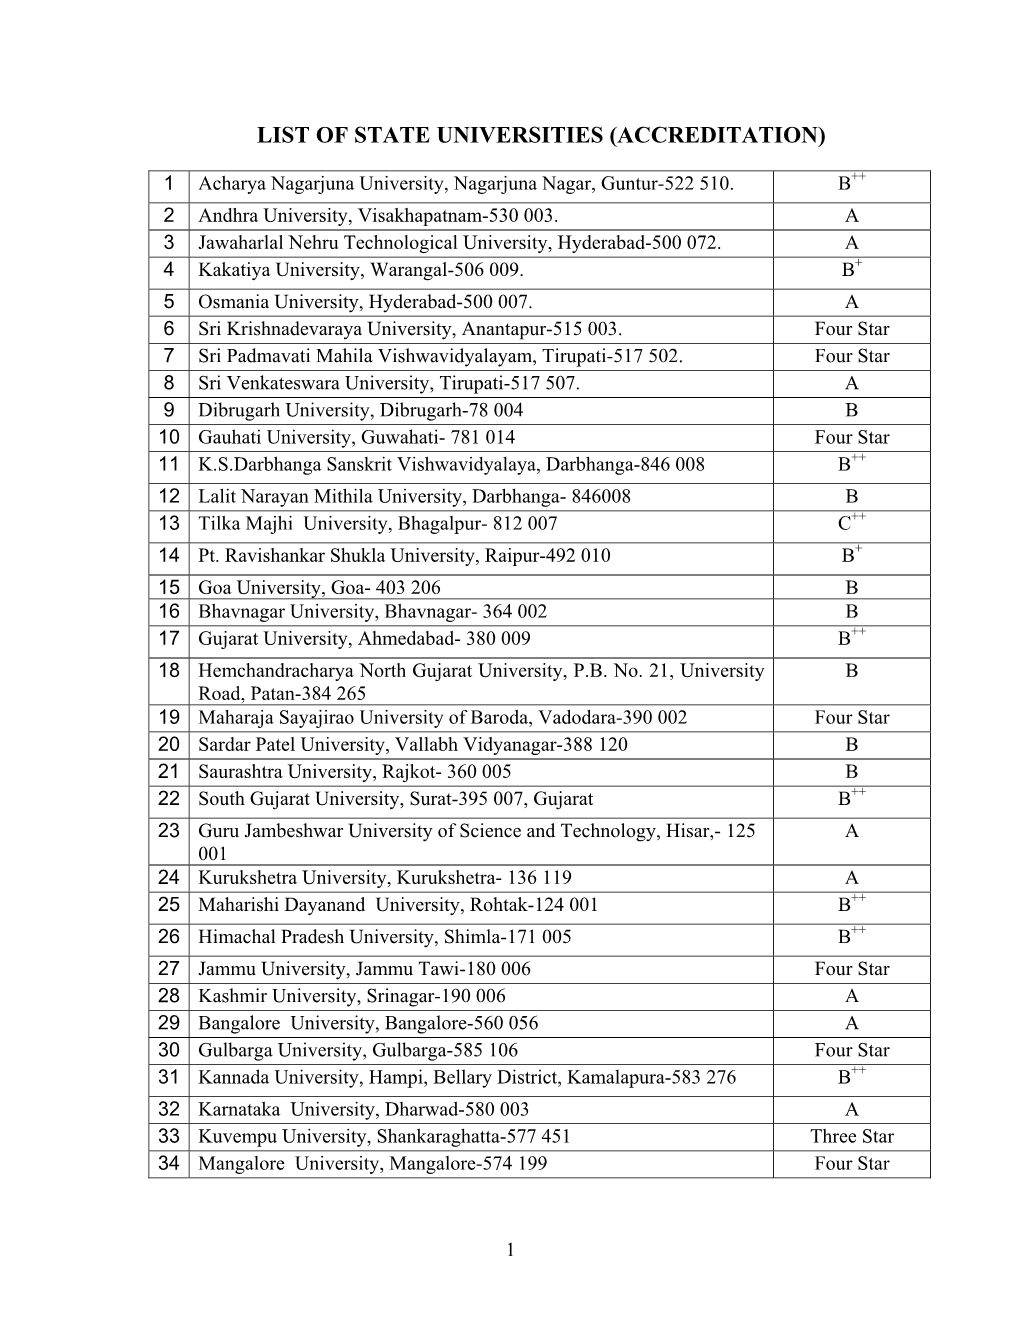 List of State Universities (Accreditation)